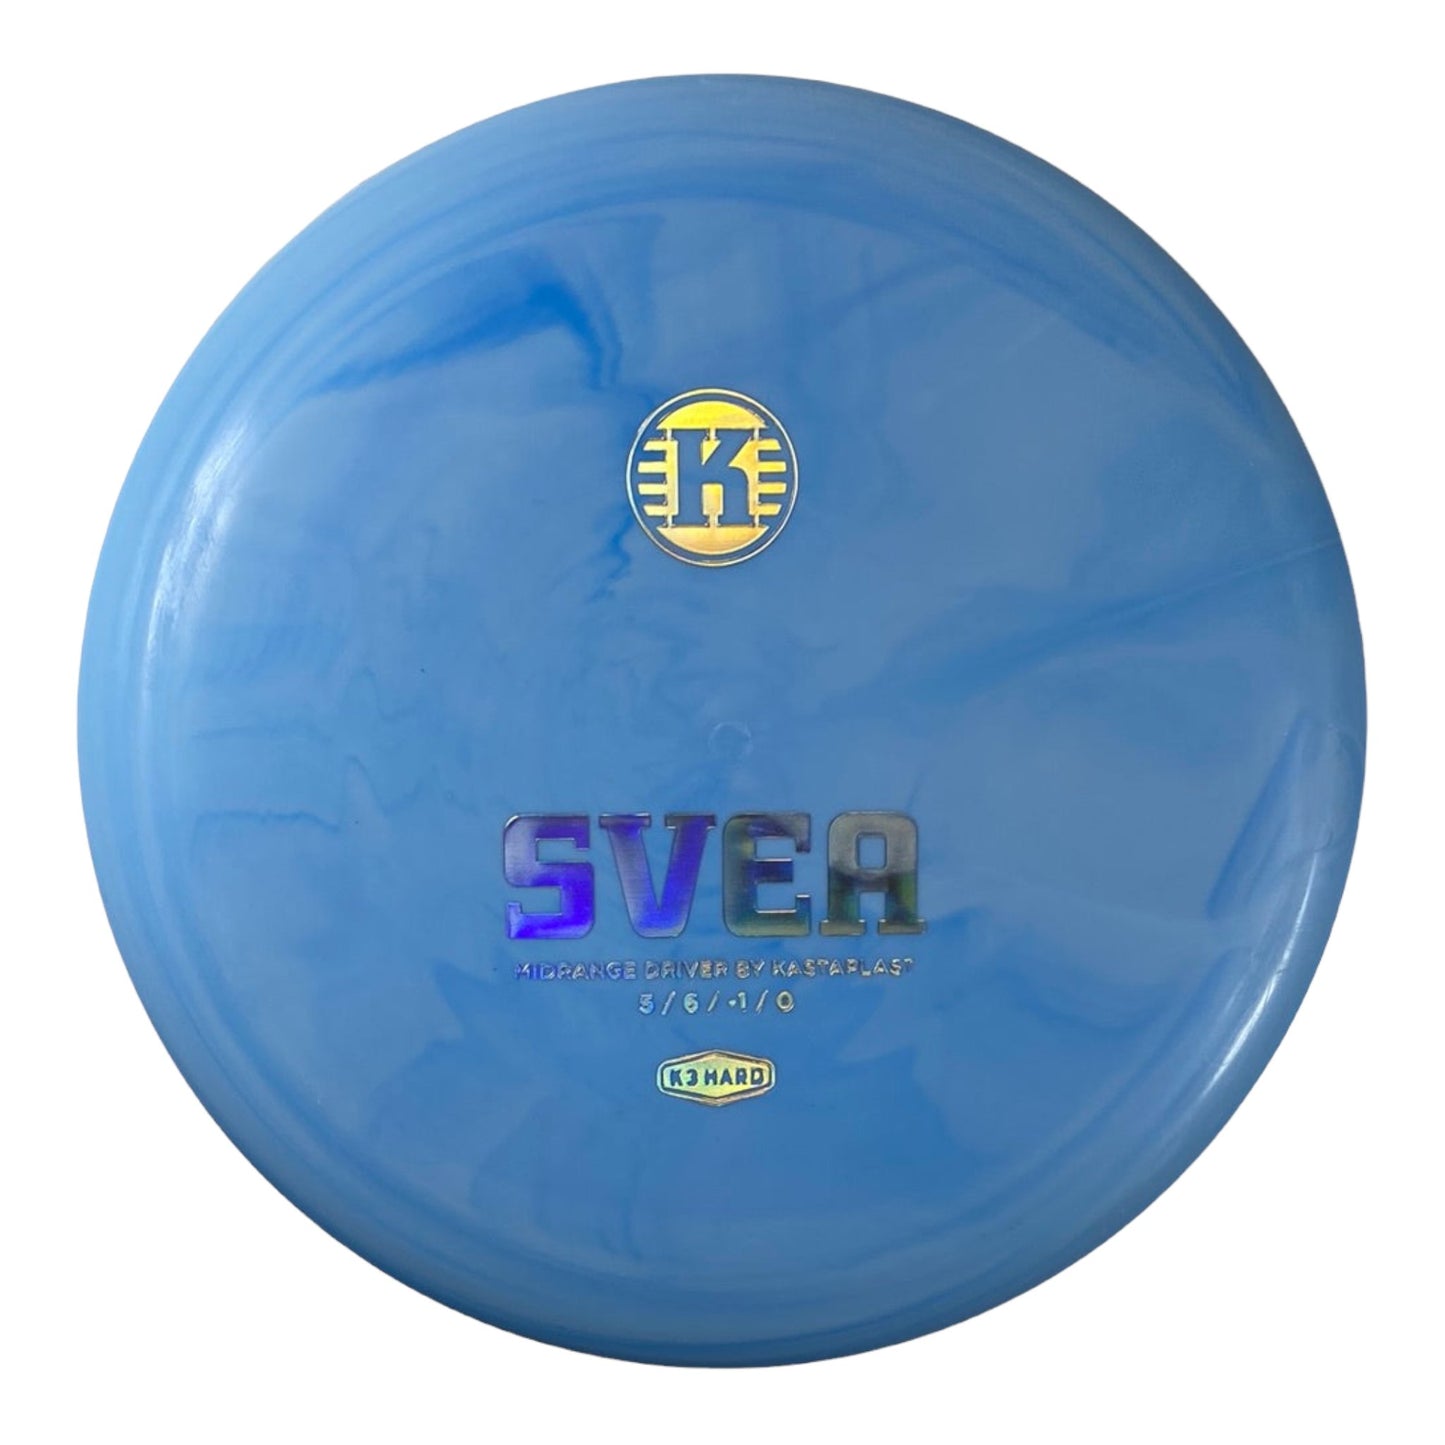 Kastaplast Svea | K3 Hard | Blue/Holo 175g Disc Golf